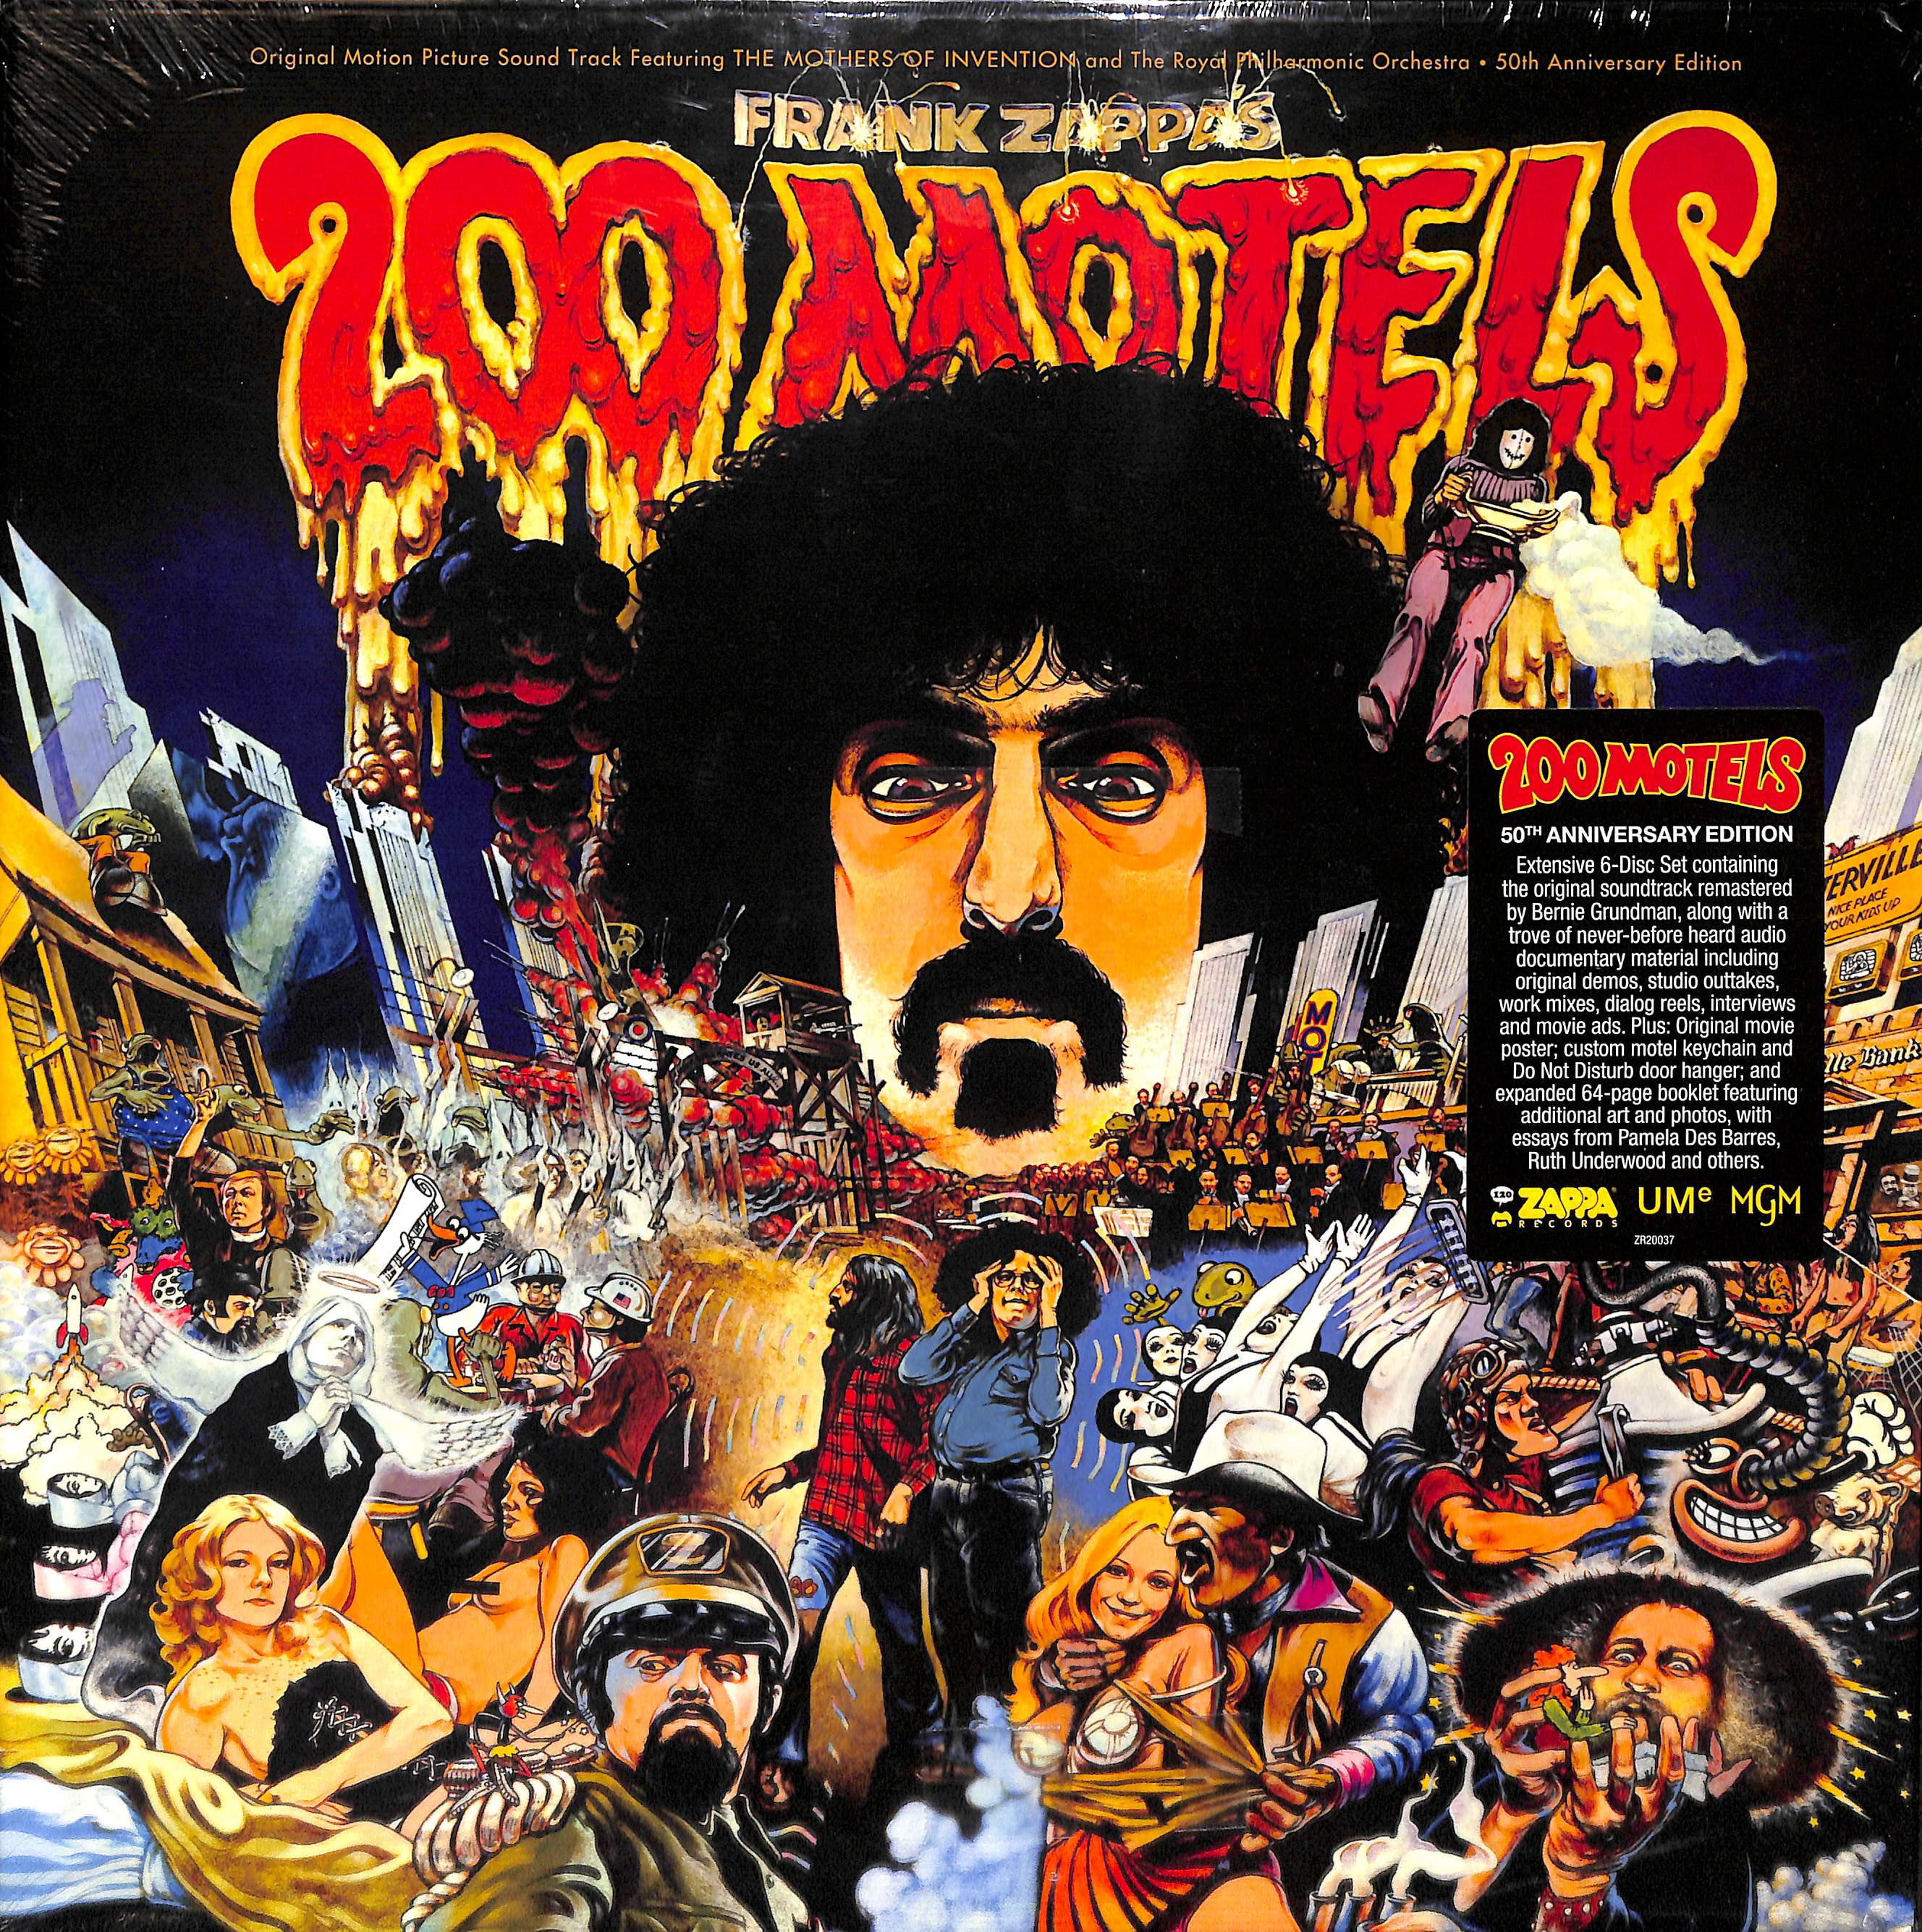 B57545R7 6 x Cd  - Frank Zappa  200 Motels (50th Anniversary Edition)